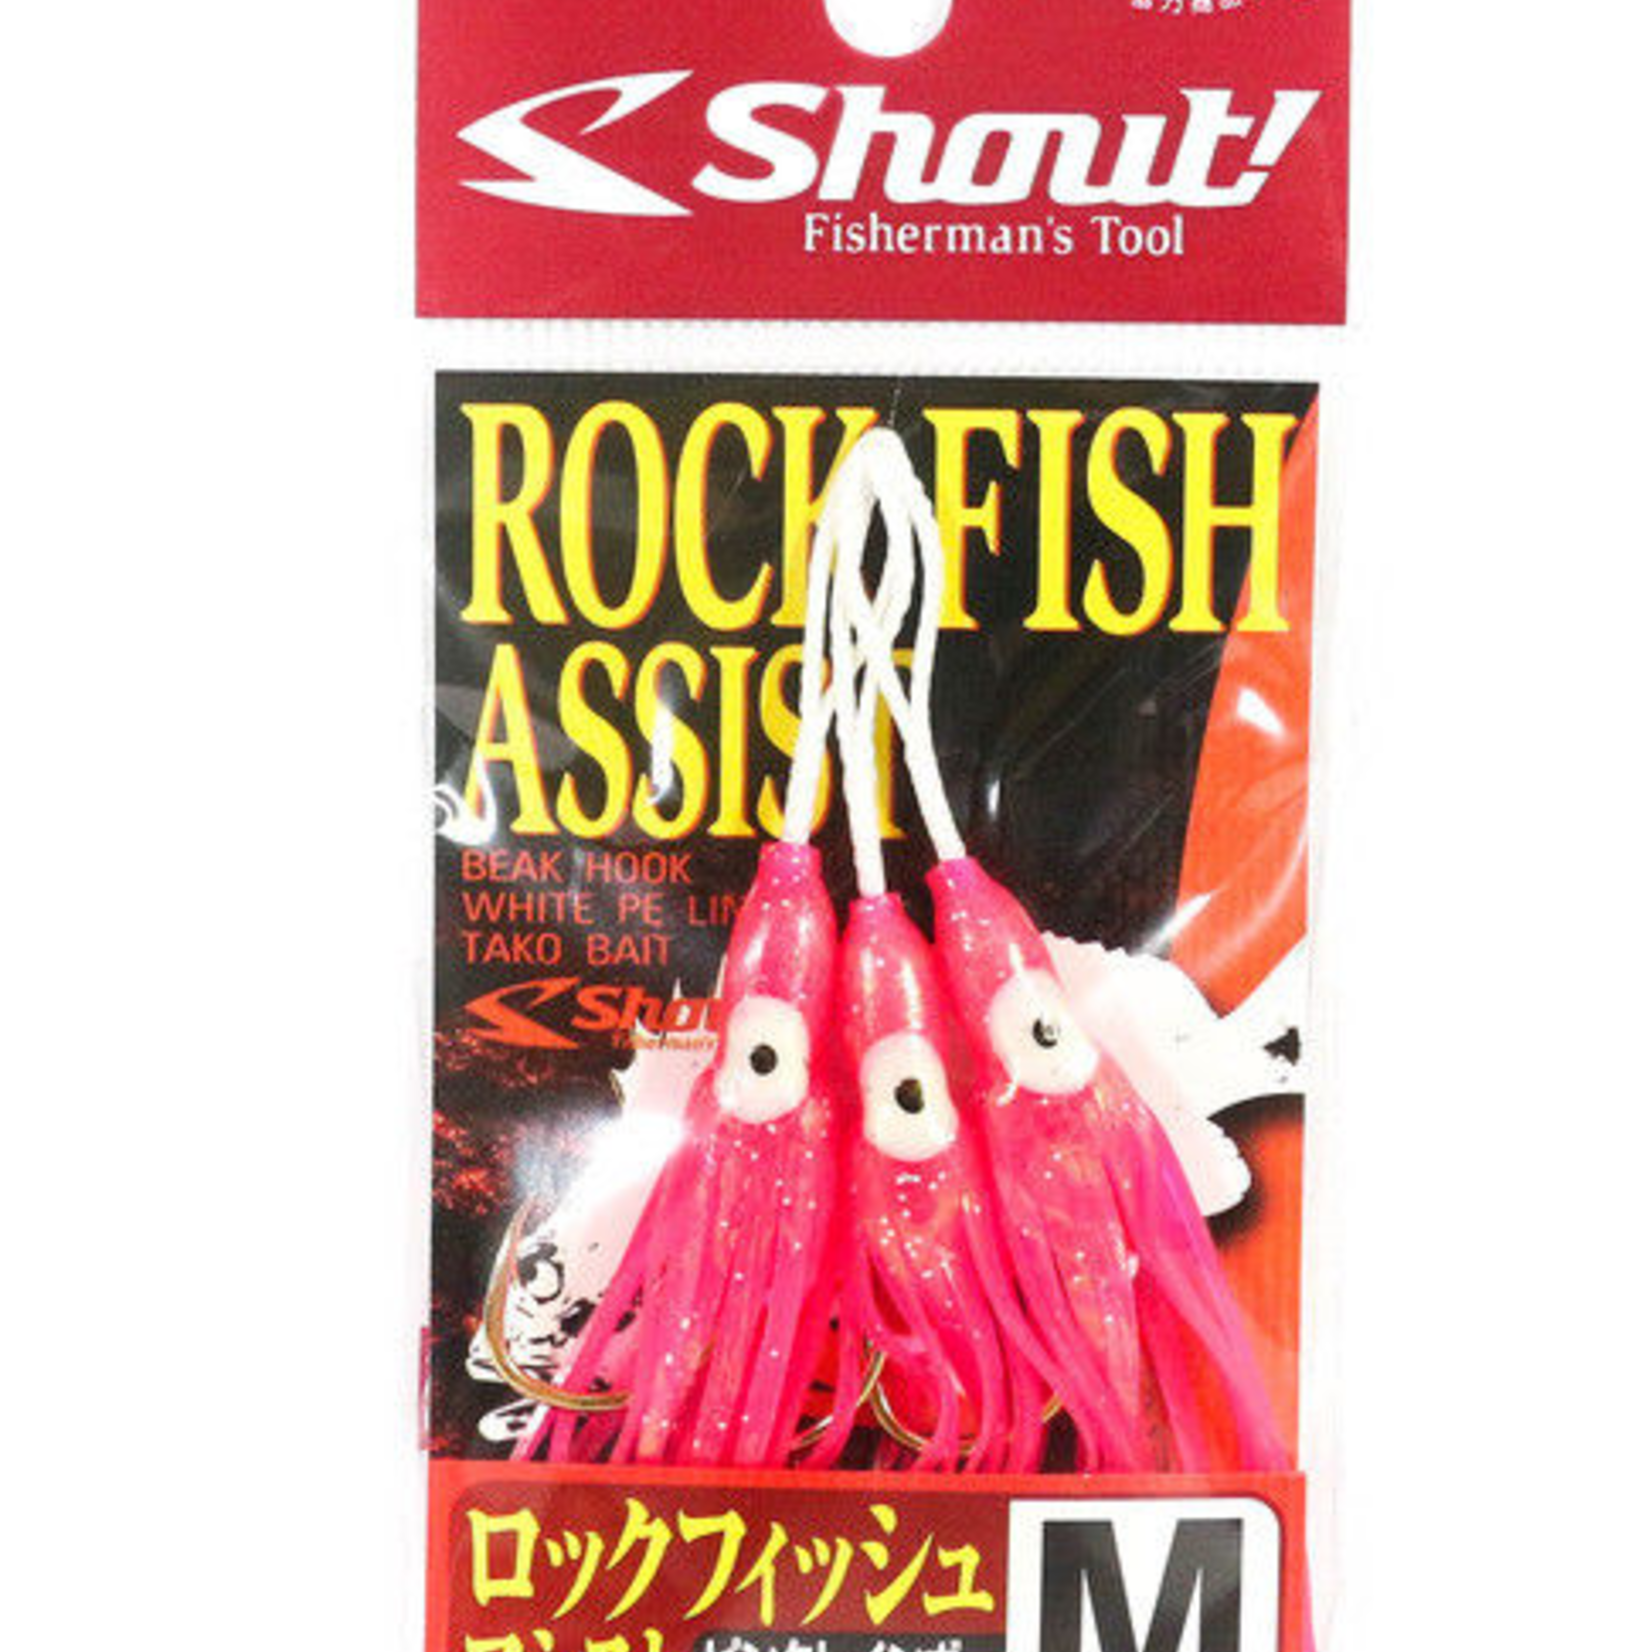 Shout Rock Fish Assist Hook